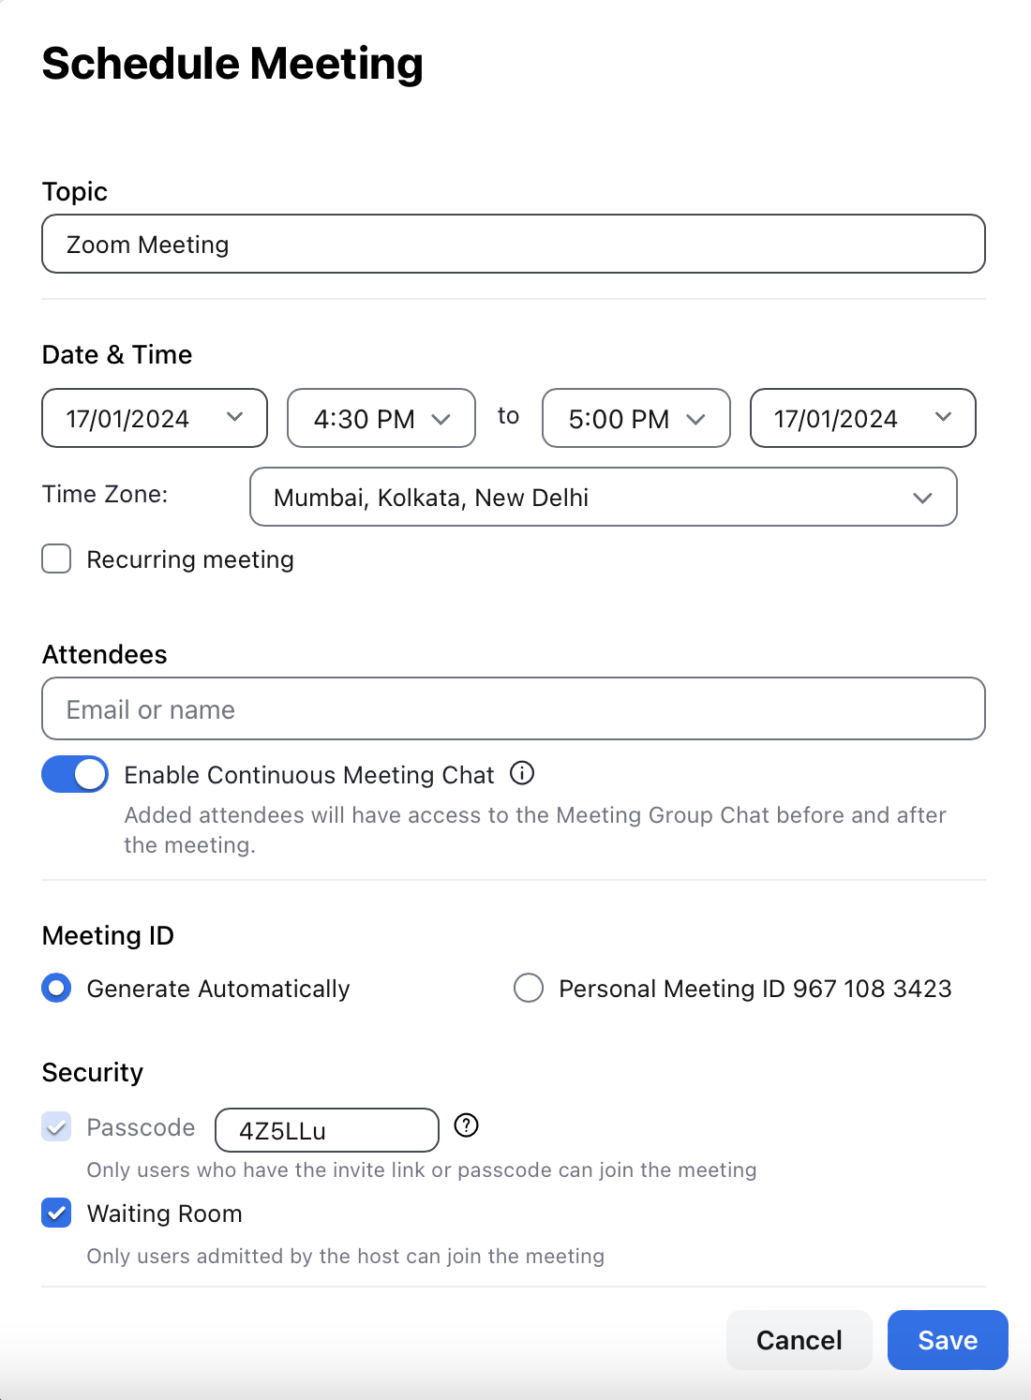 Customizing meeting options on Zoom